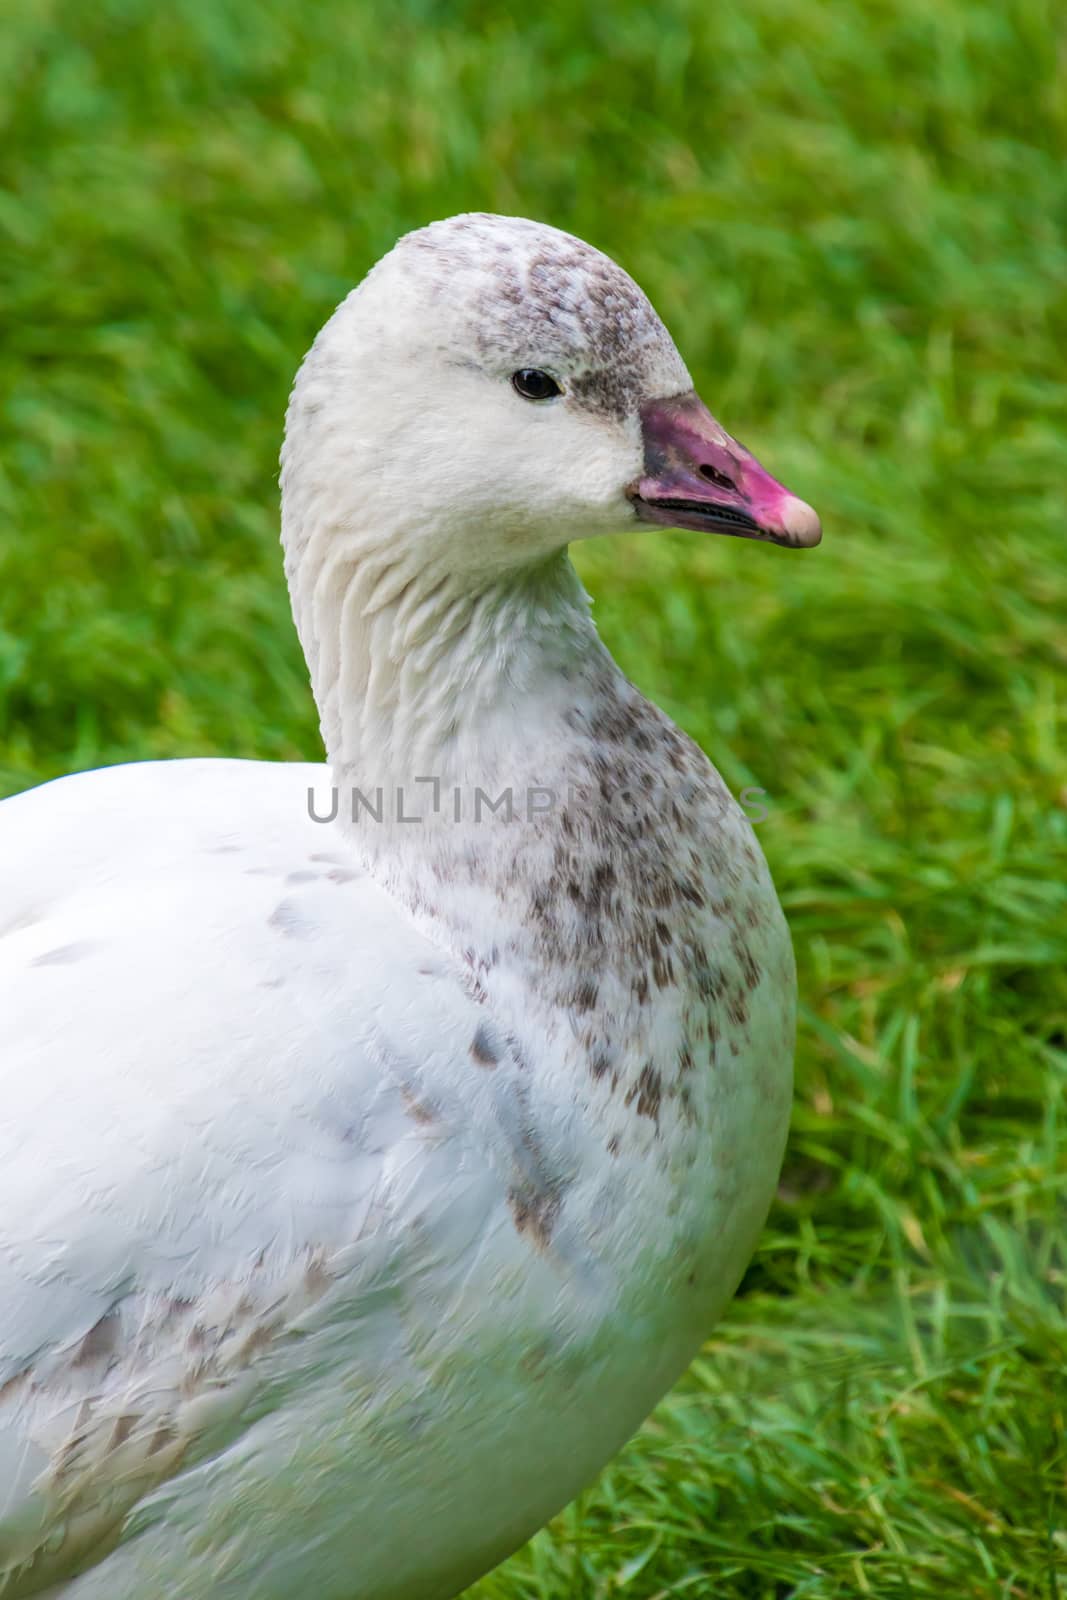 White wild duck with magenta colored beak